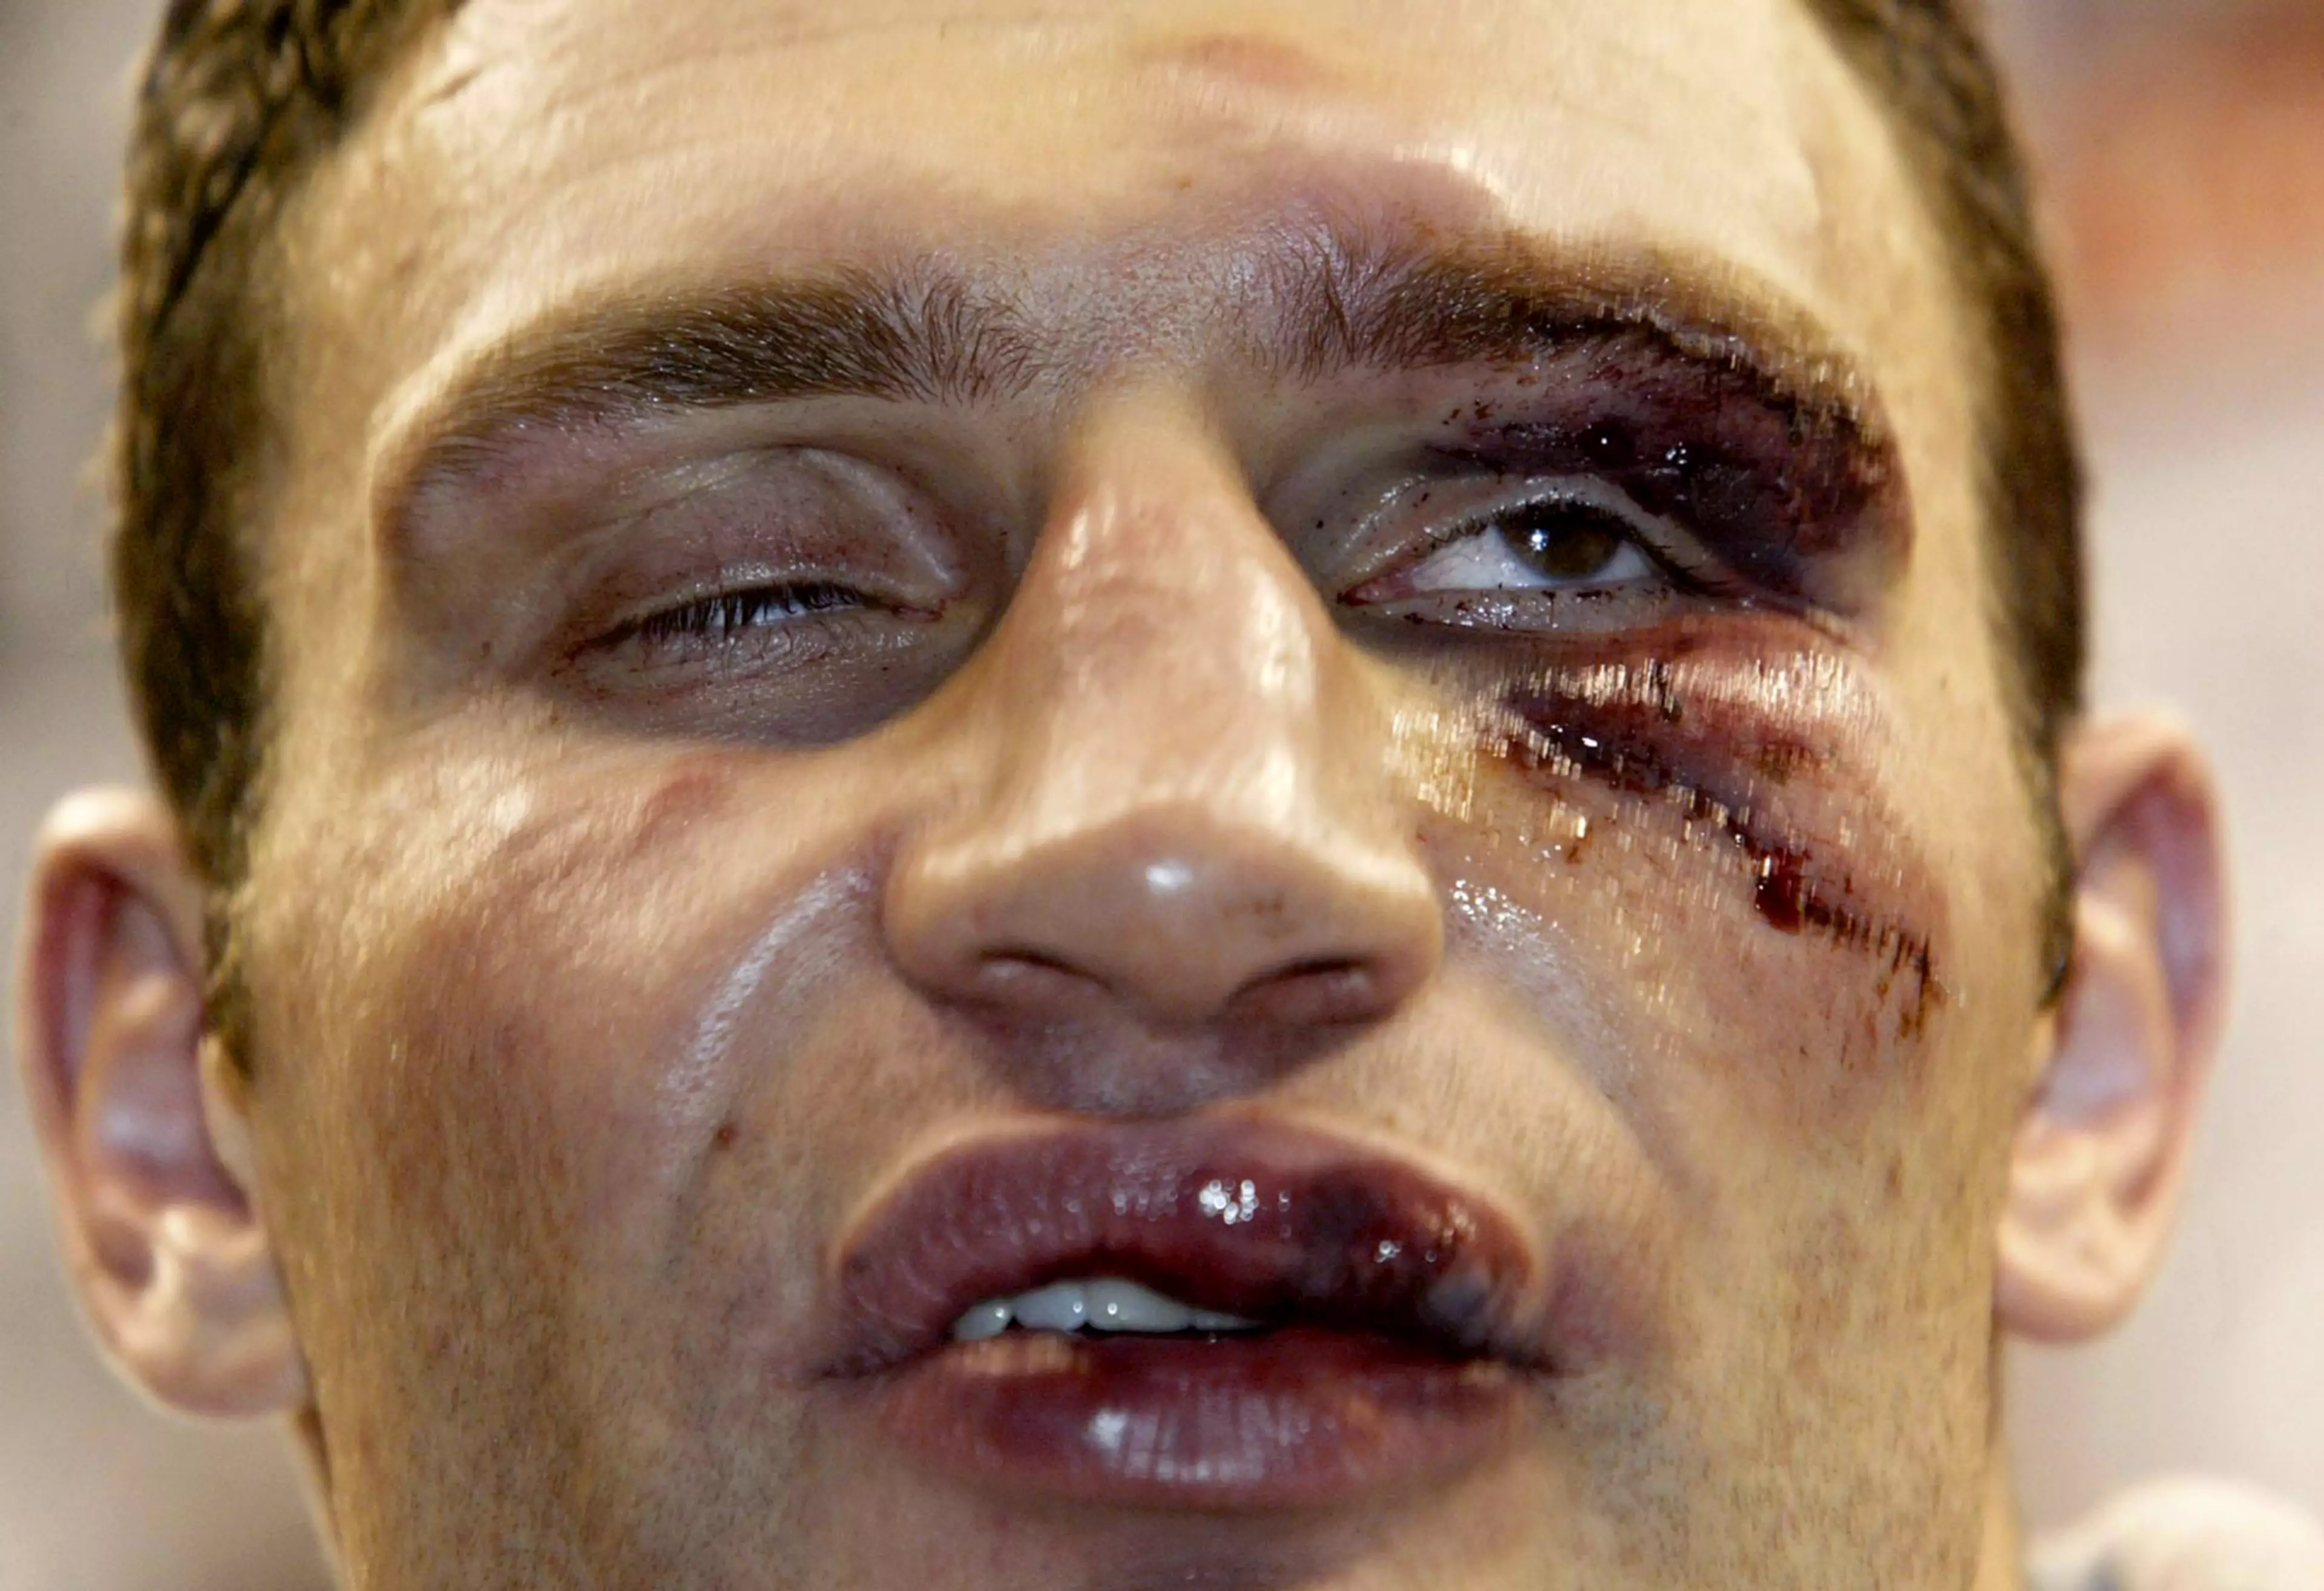 Vitali's battered face. Image: PA